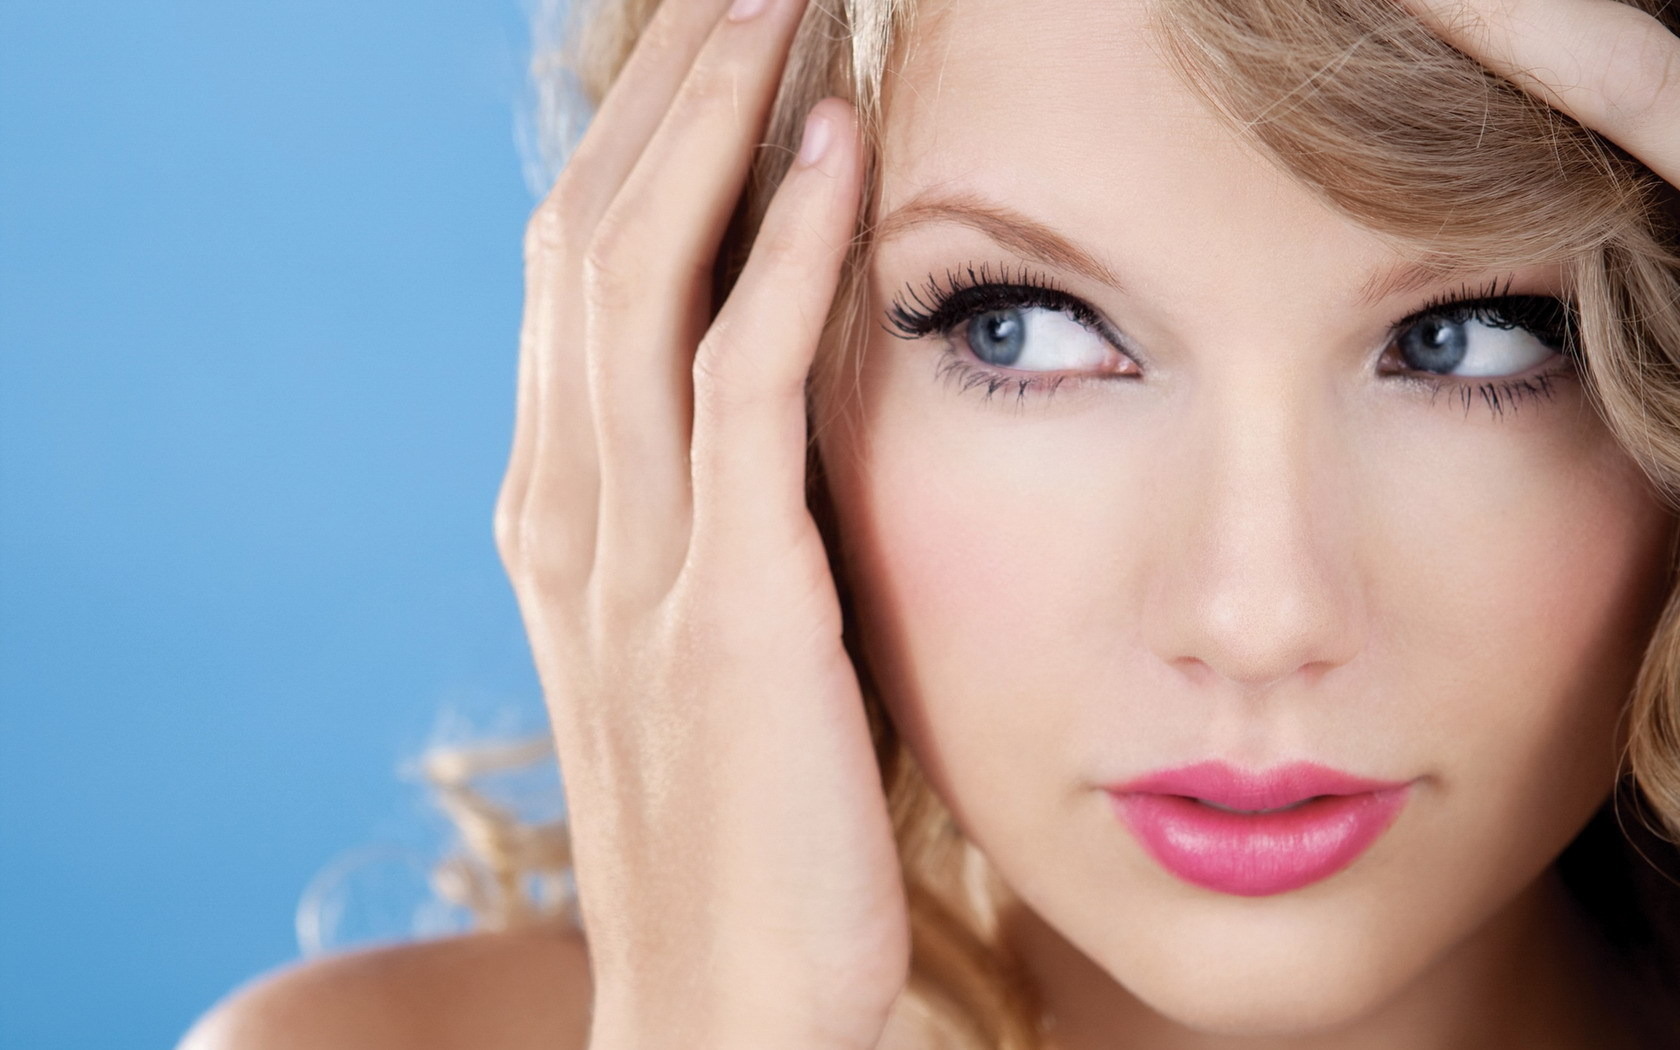 Taylor Swift desktop wallpaper with music theme